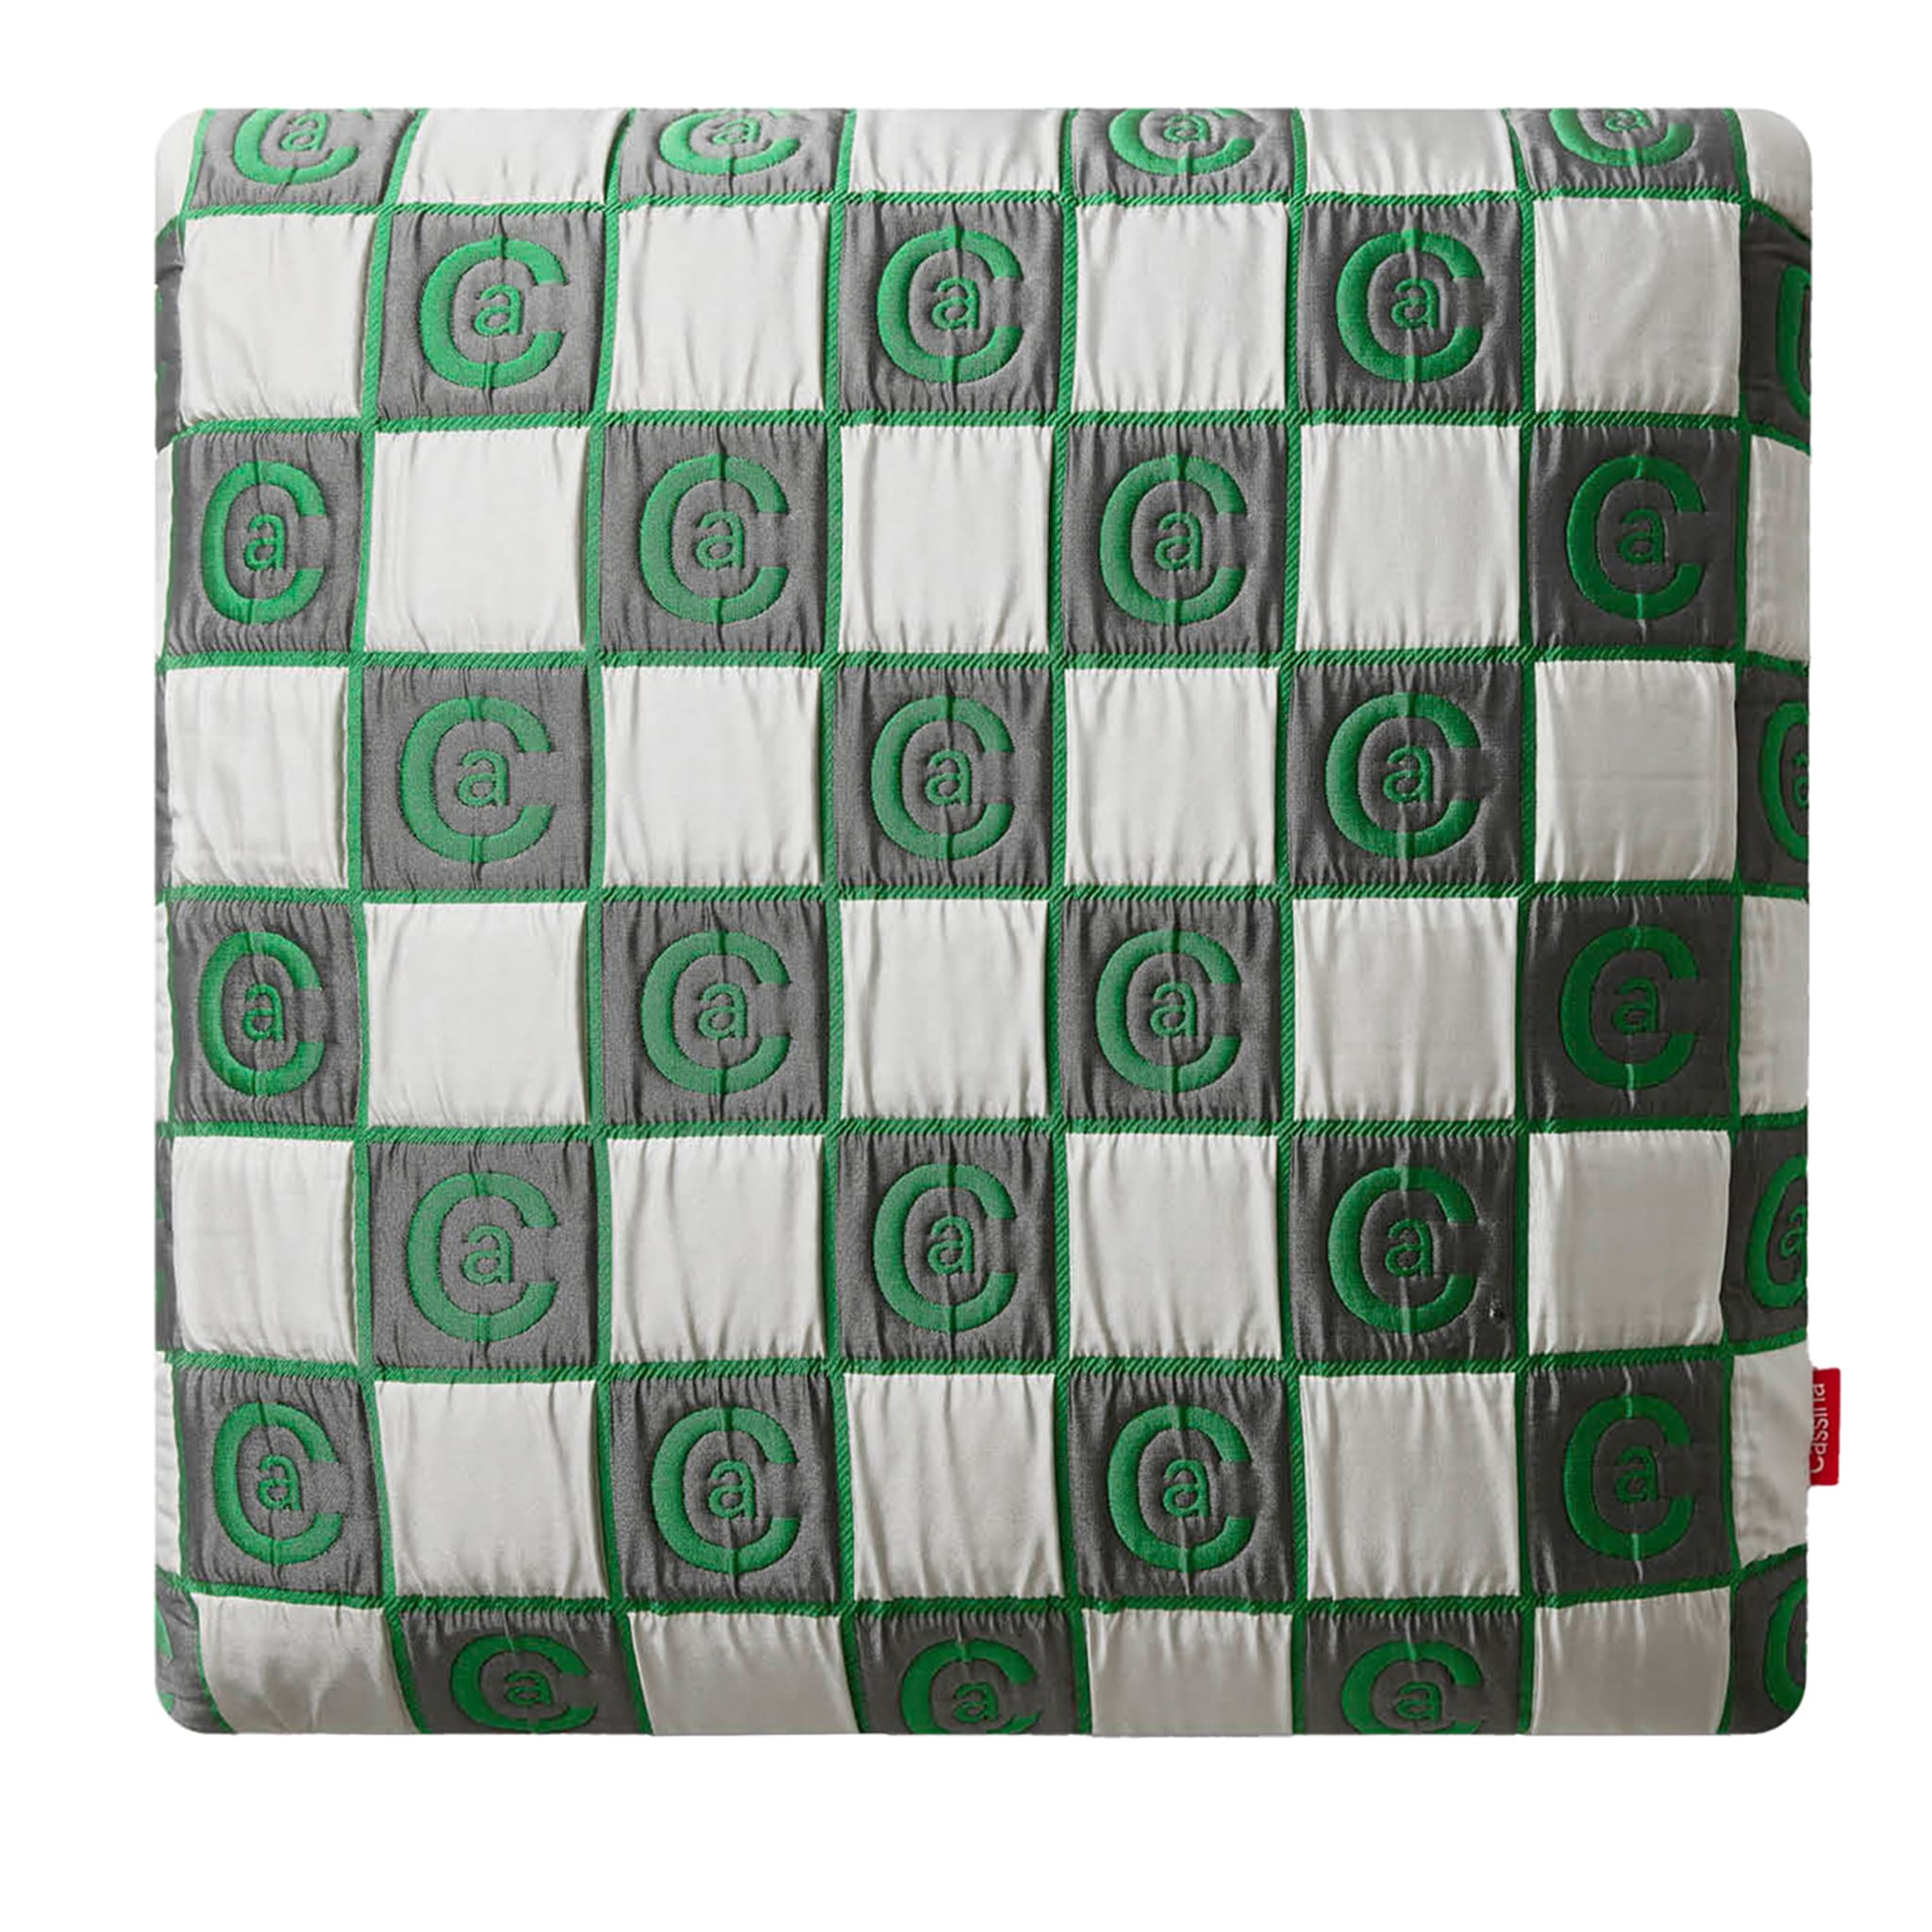 Chess Frame Decorative Cushions #3 - Main view